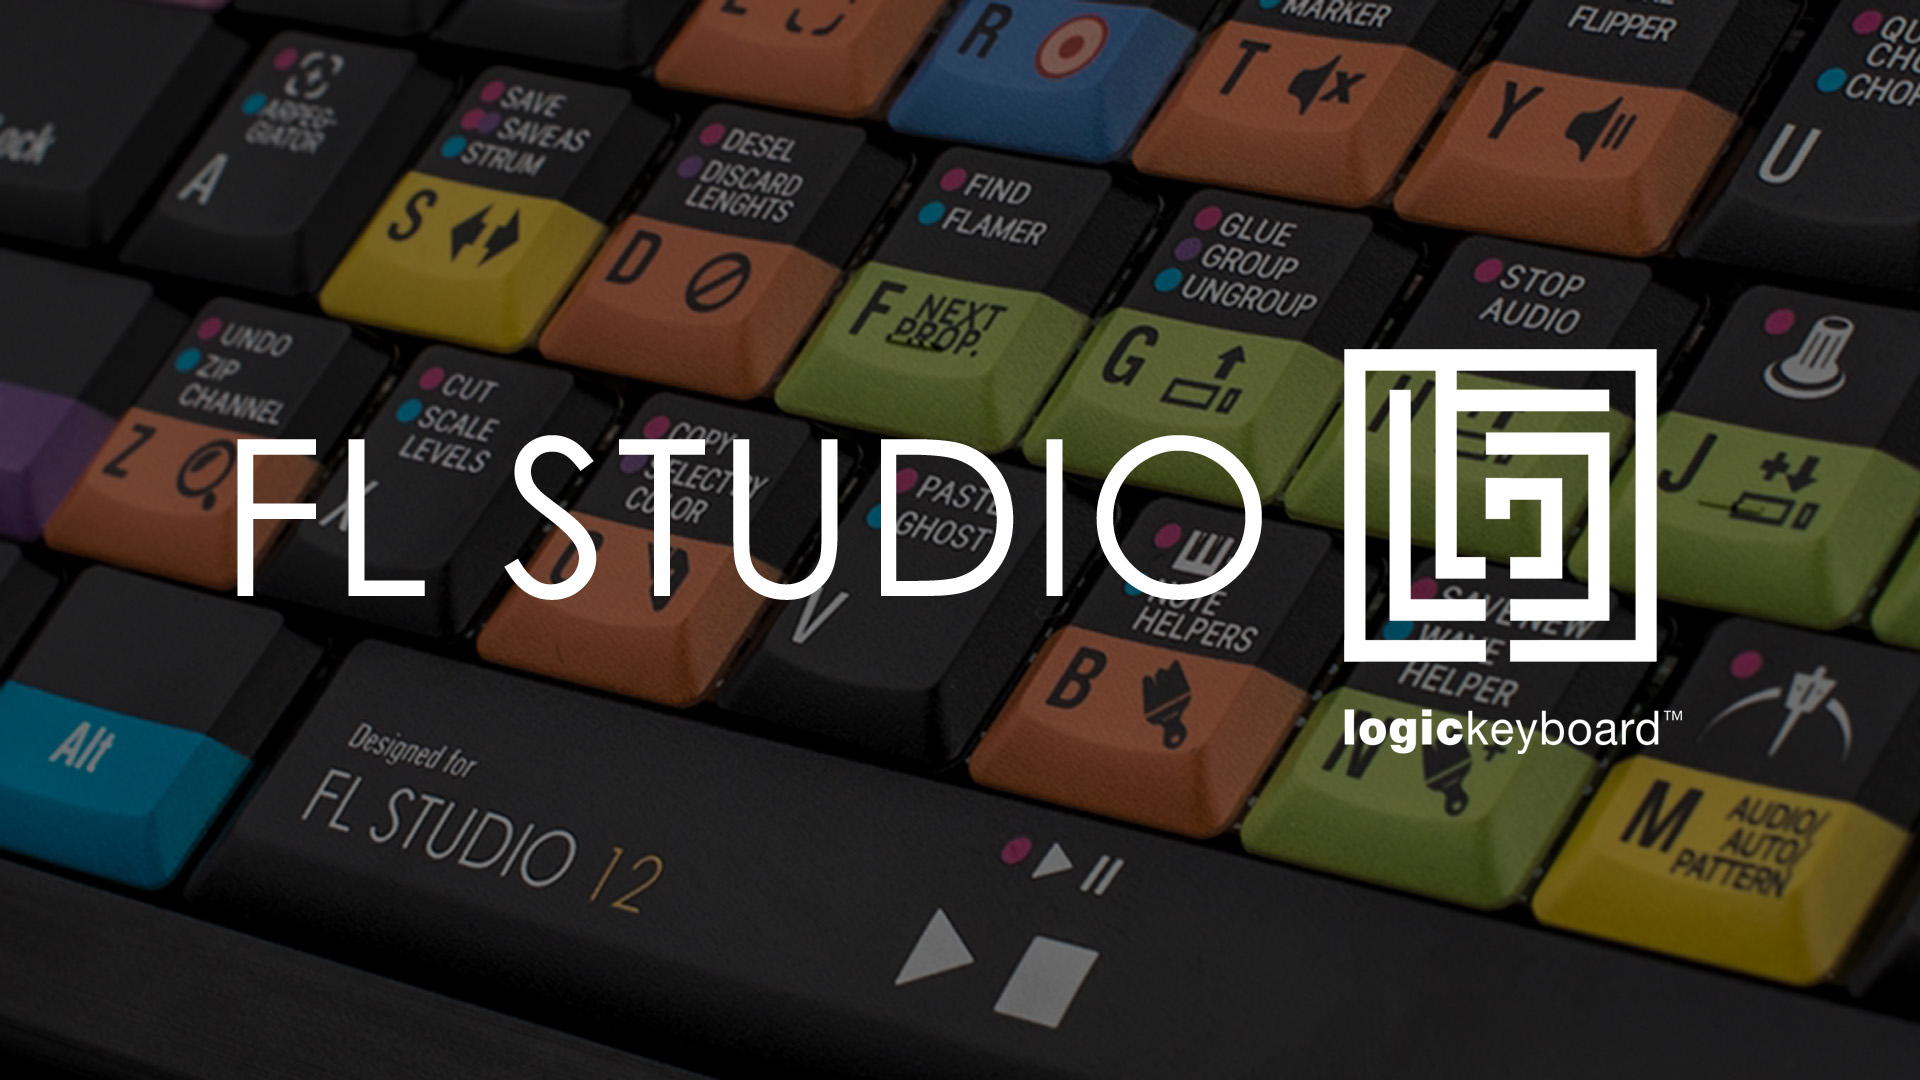 fl studio 12 keyboard shortcuts